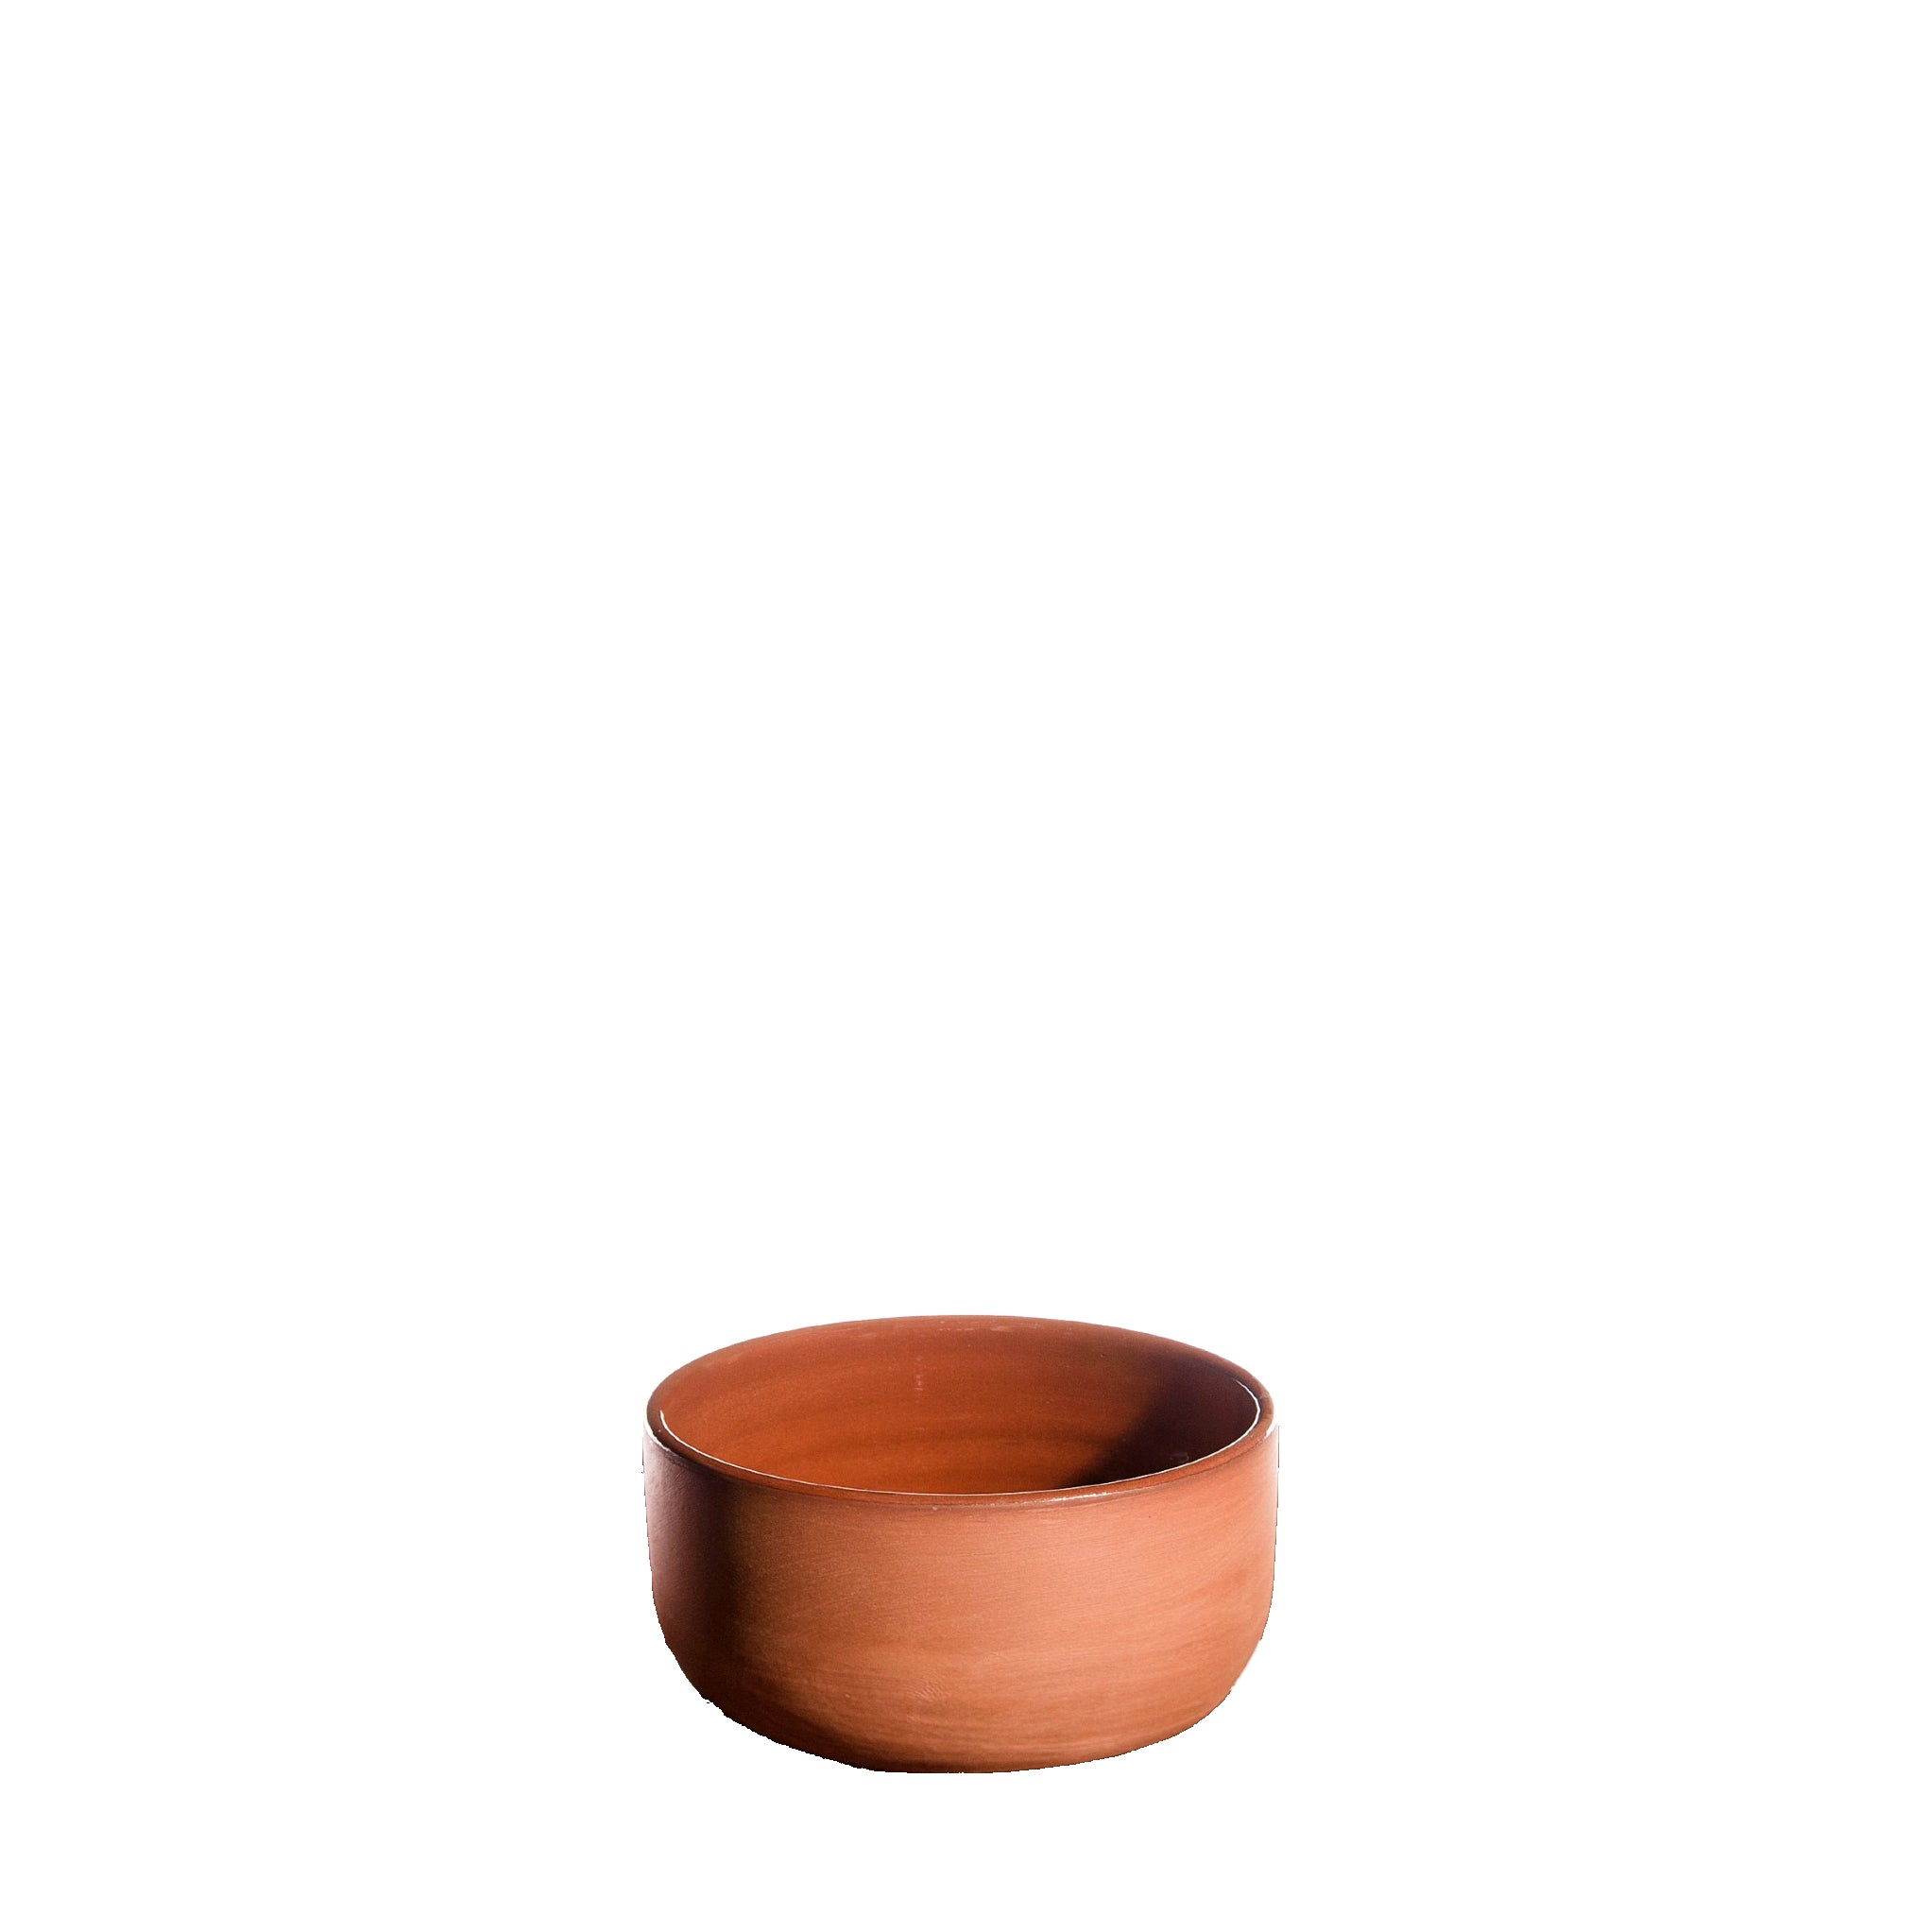 Ramekin lille ildfast skål i terracotta, håndlavet keramik fra Oliviers & Co